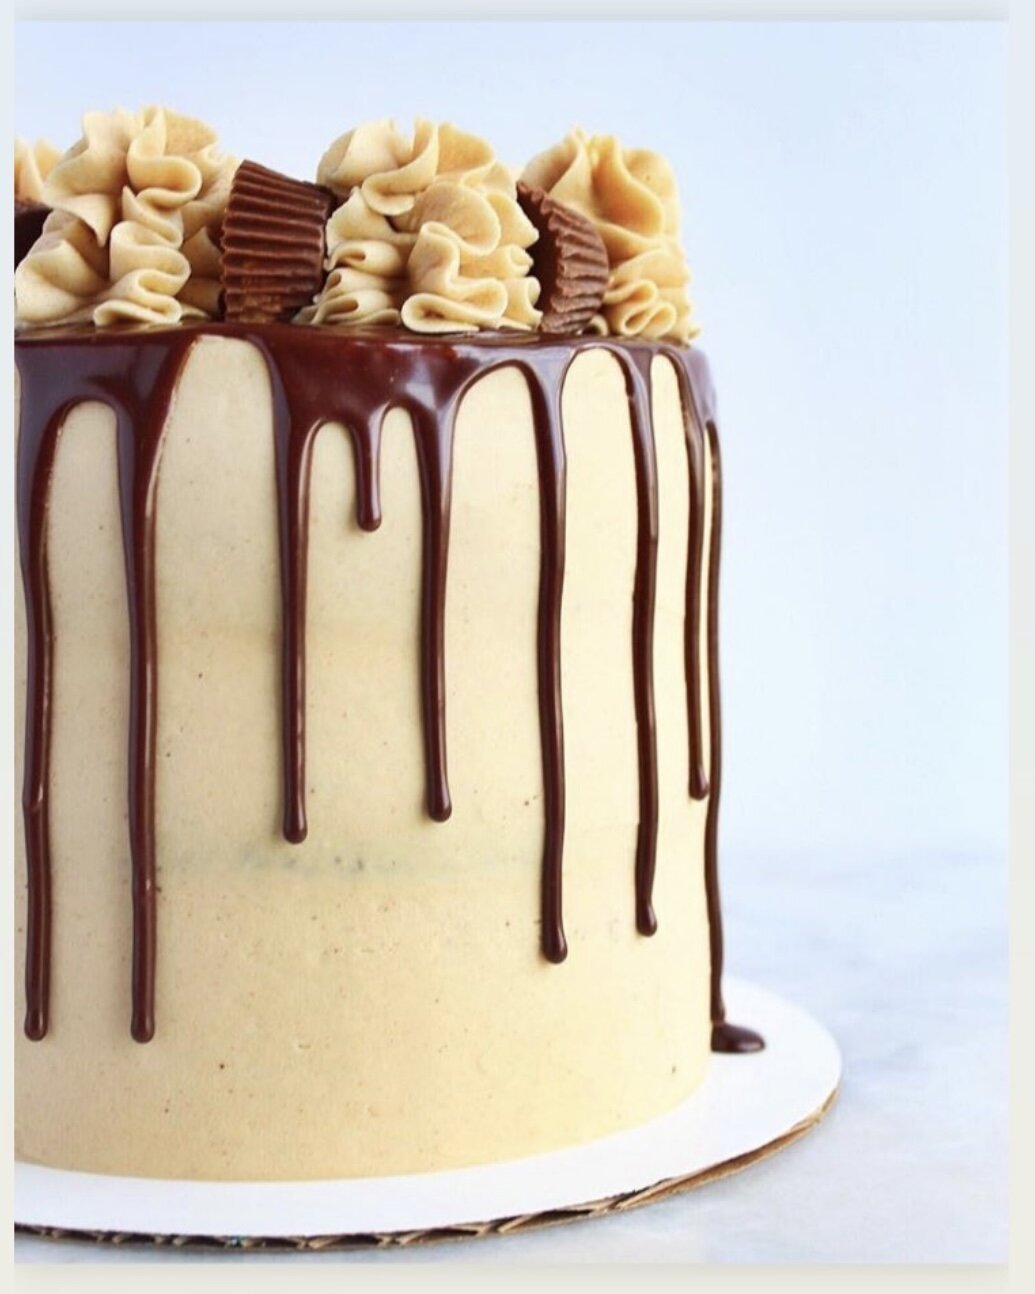 PBCC (Peanut Butter Chocolate Cake)